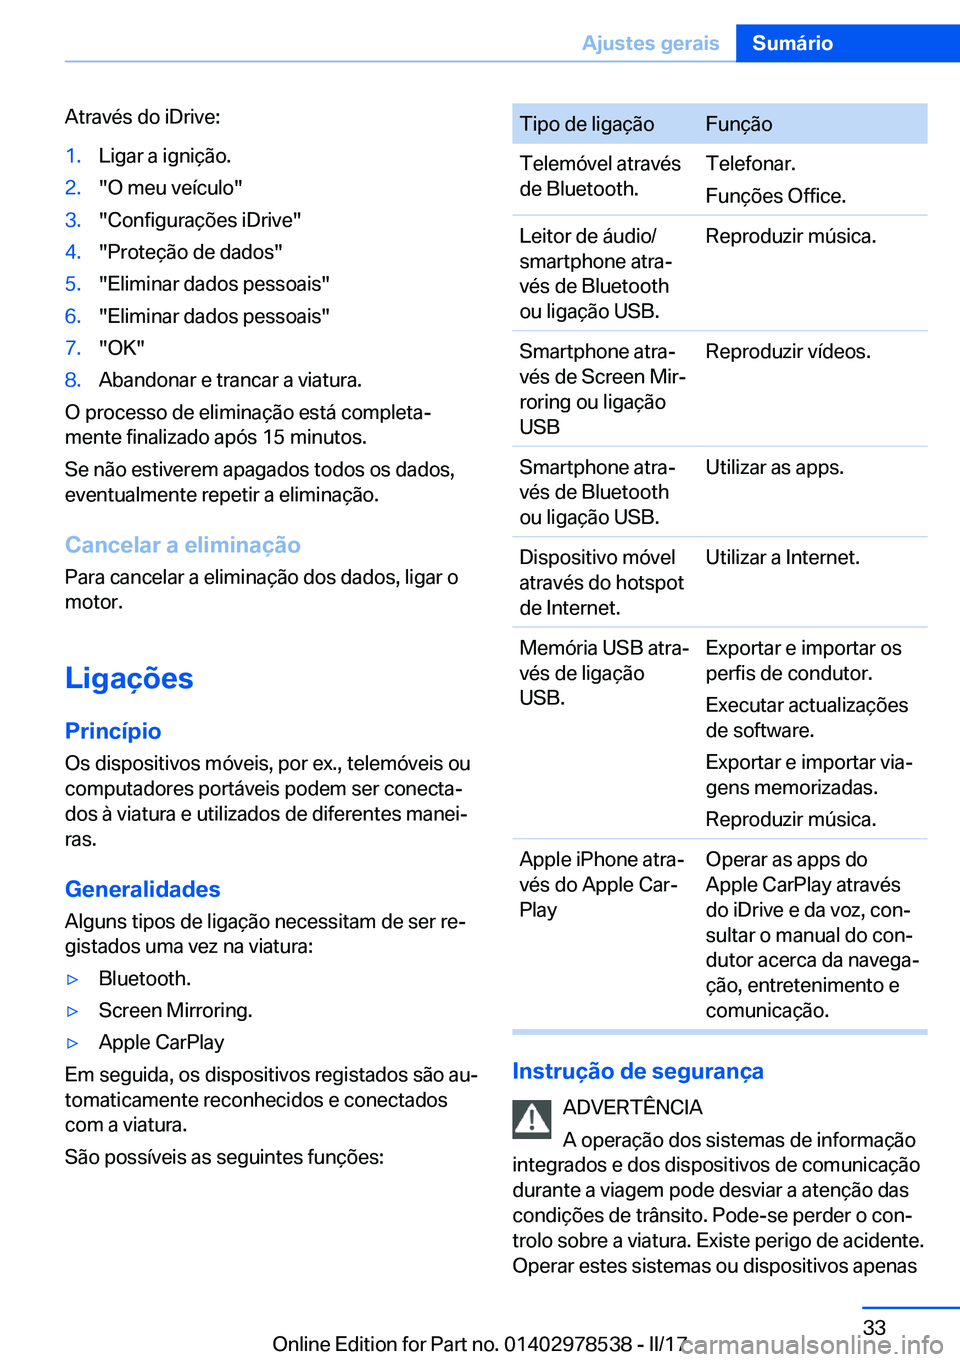 BMW X6 M 2017  Manual do condutor (in Portuguese) �A�t�r�a�v�é�s� �d�o� �i�D�r�i�v�e�:�1�.�L�i�g�a�r� �a� �i�g�n�i�ç�ã�o�.�2�.�"�O� �m�e�u� �v�e�